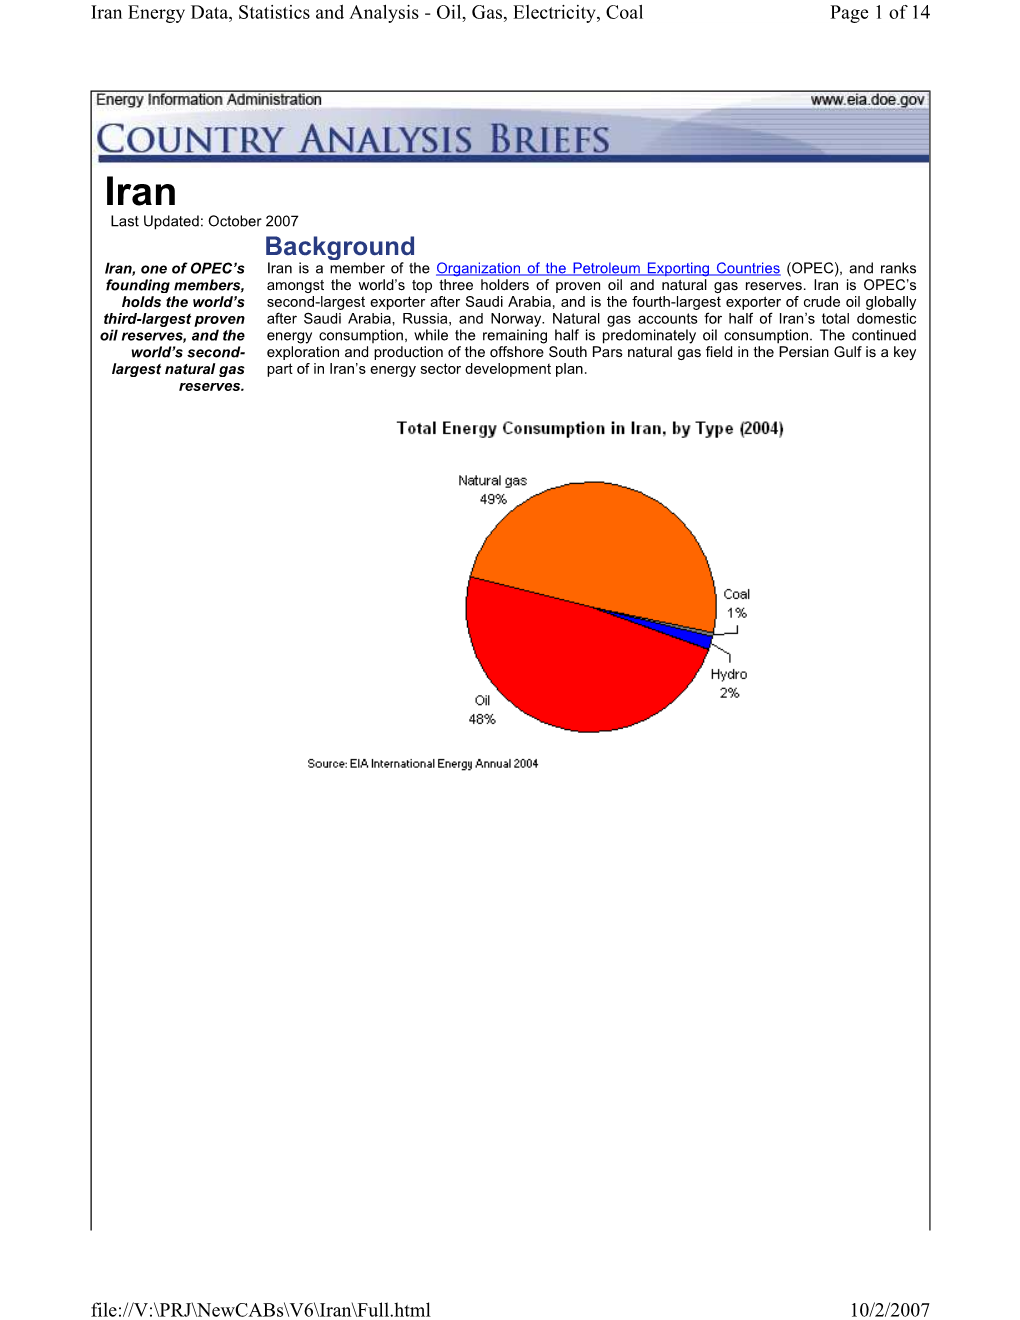 Iran Country Analysis Brief